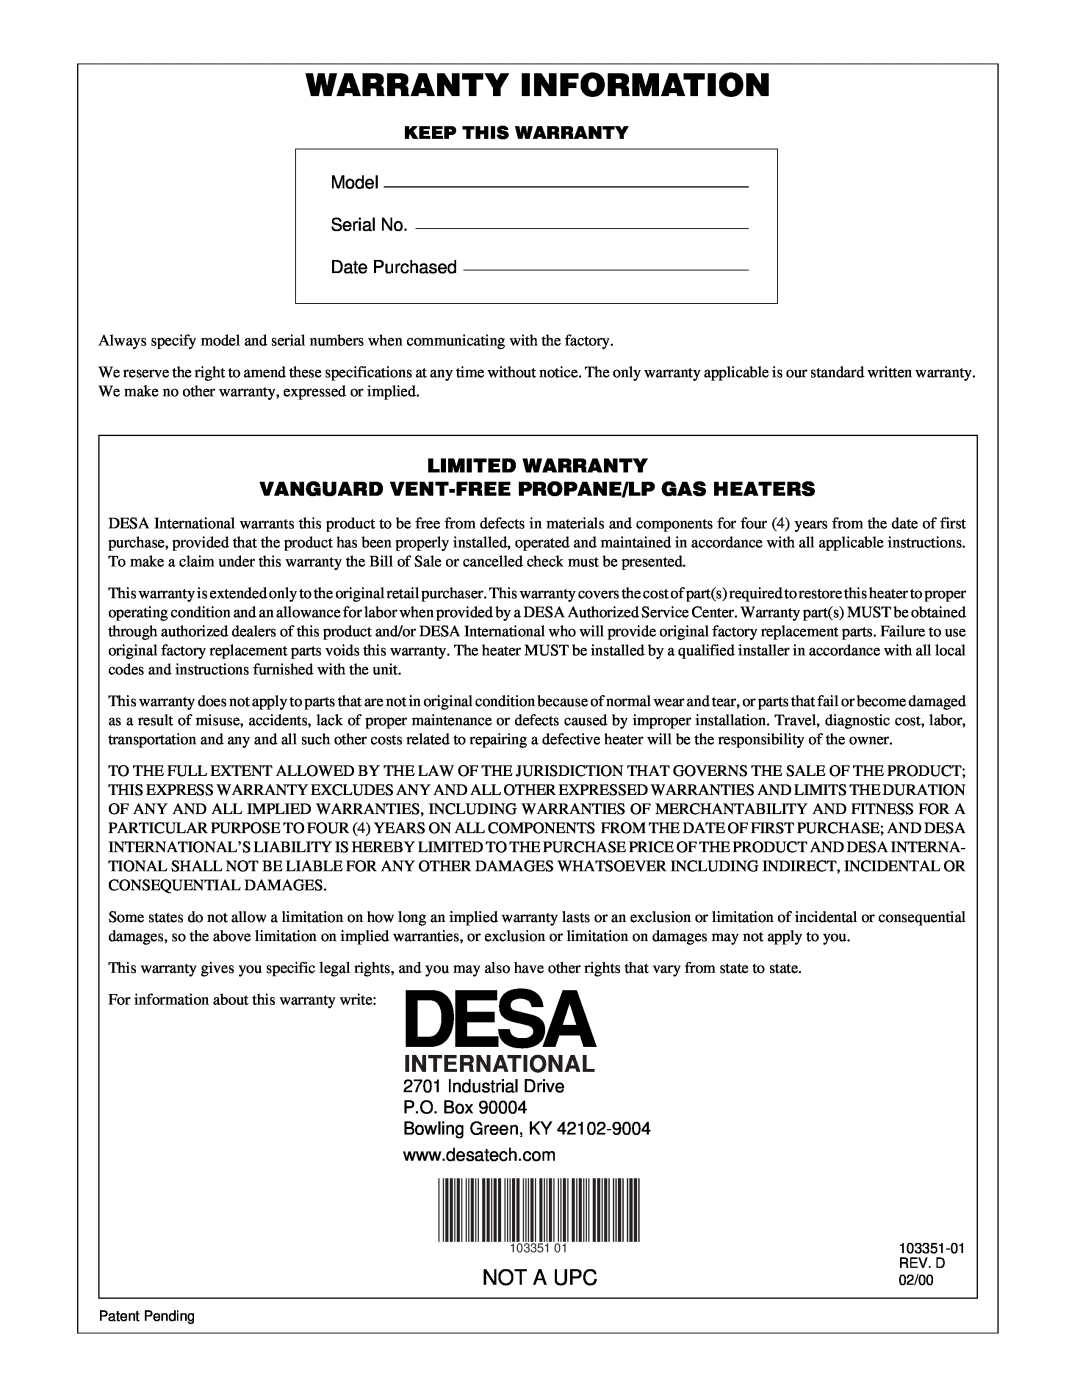 Desa VP1600E Warranty Information, International, Not A Upc, Limited Warranty, Vanguard Vent-Freepropane/Lp Gas Heaters 